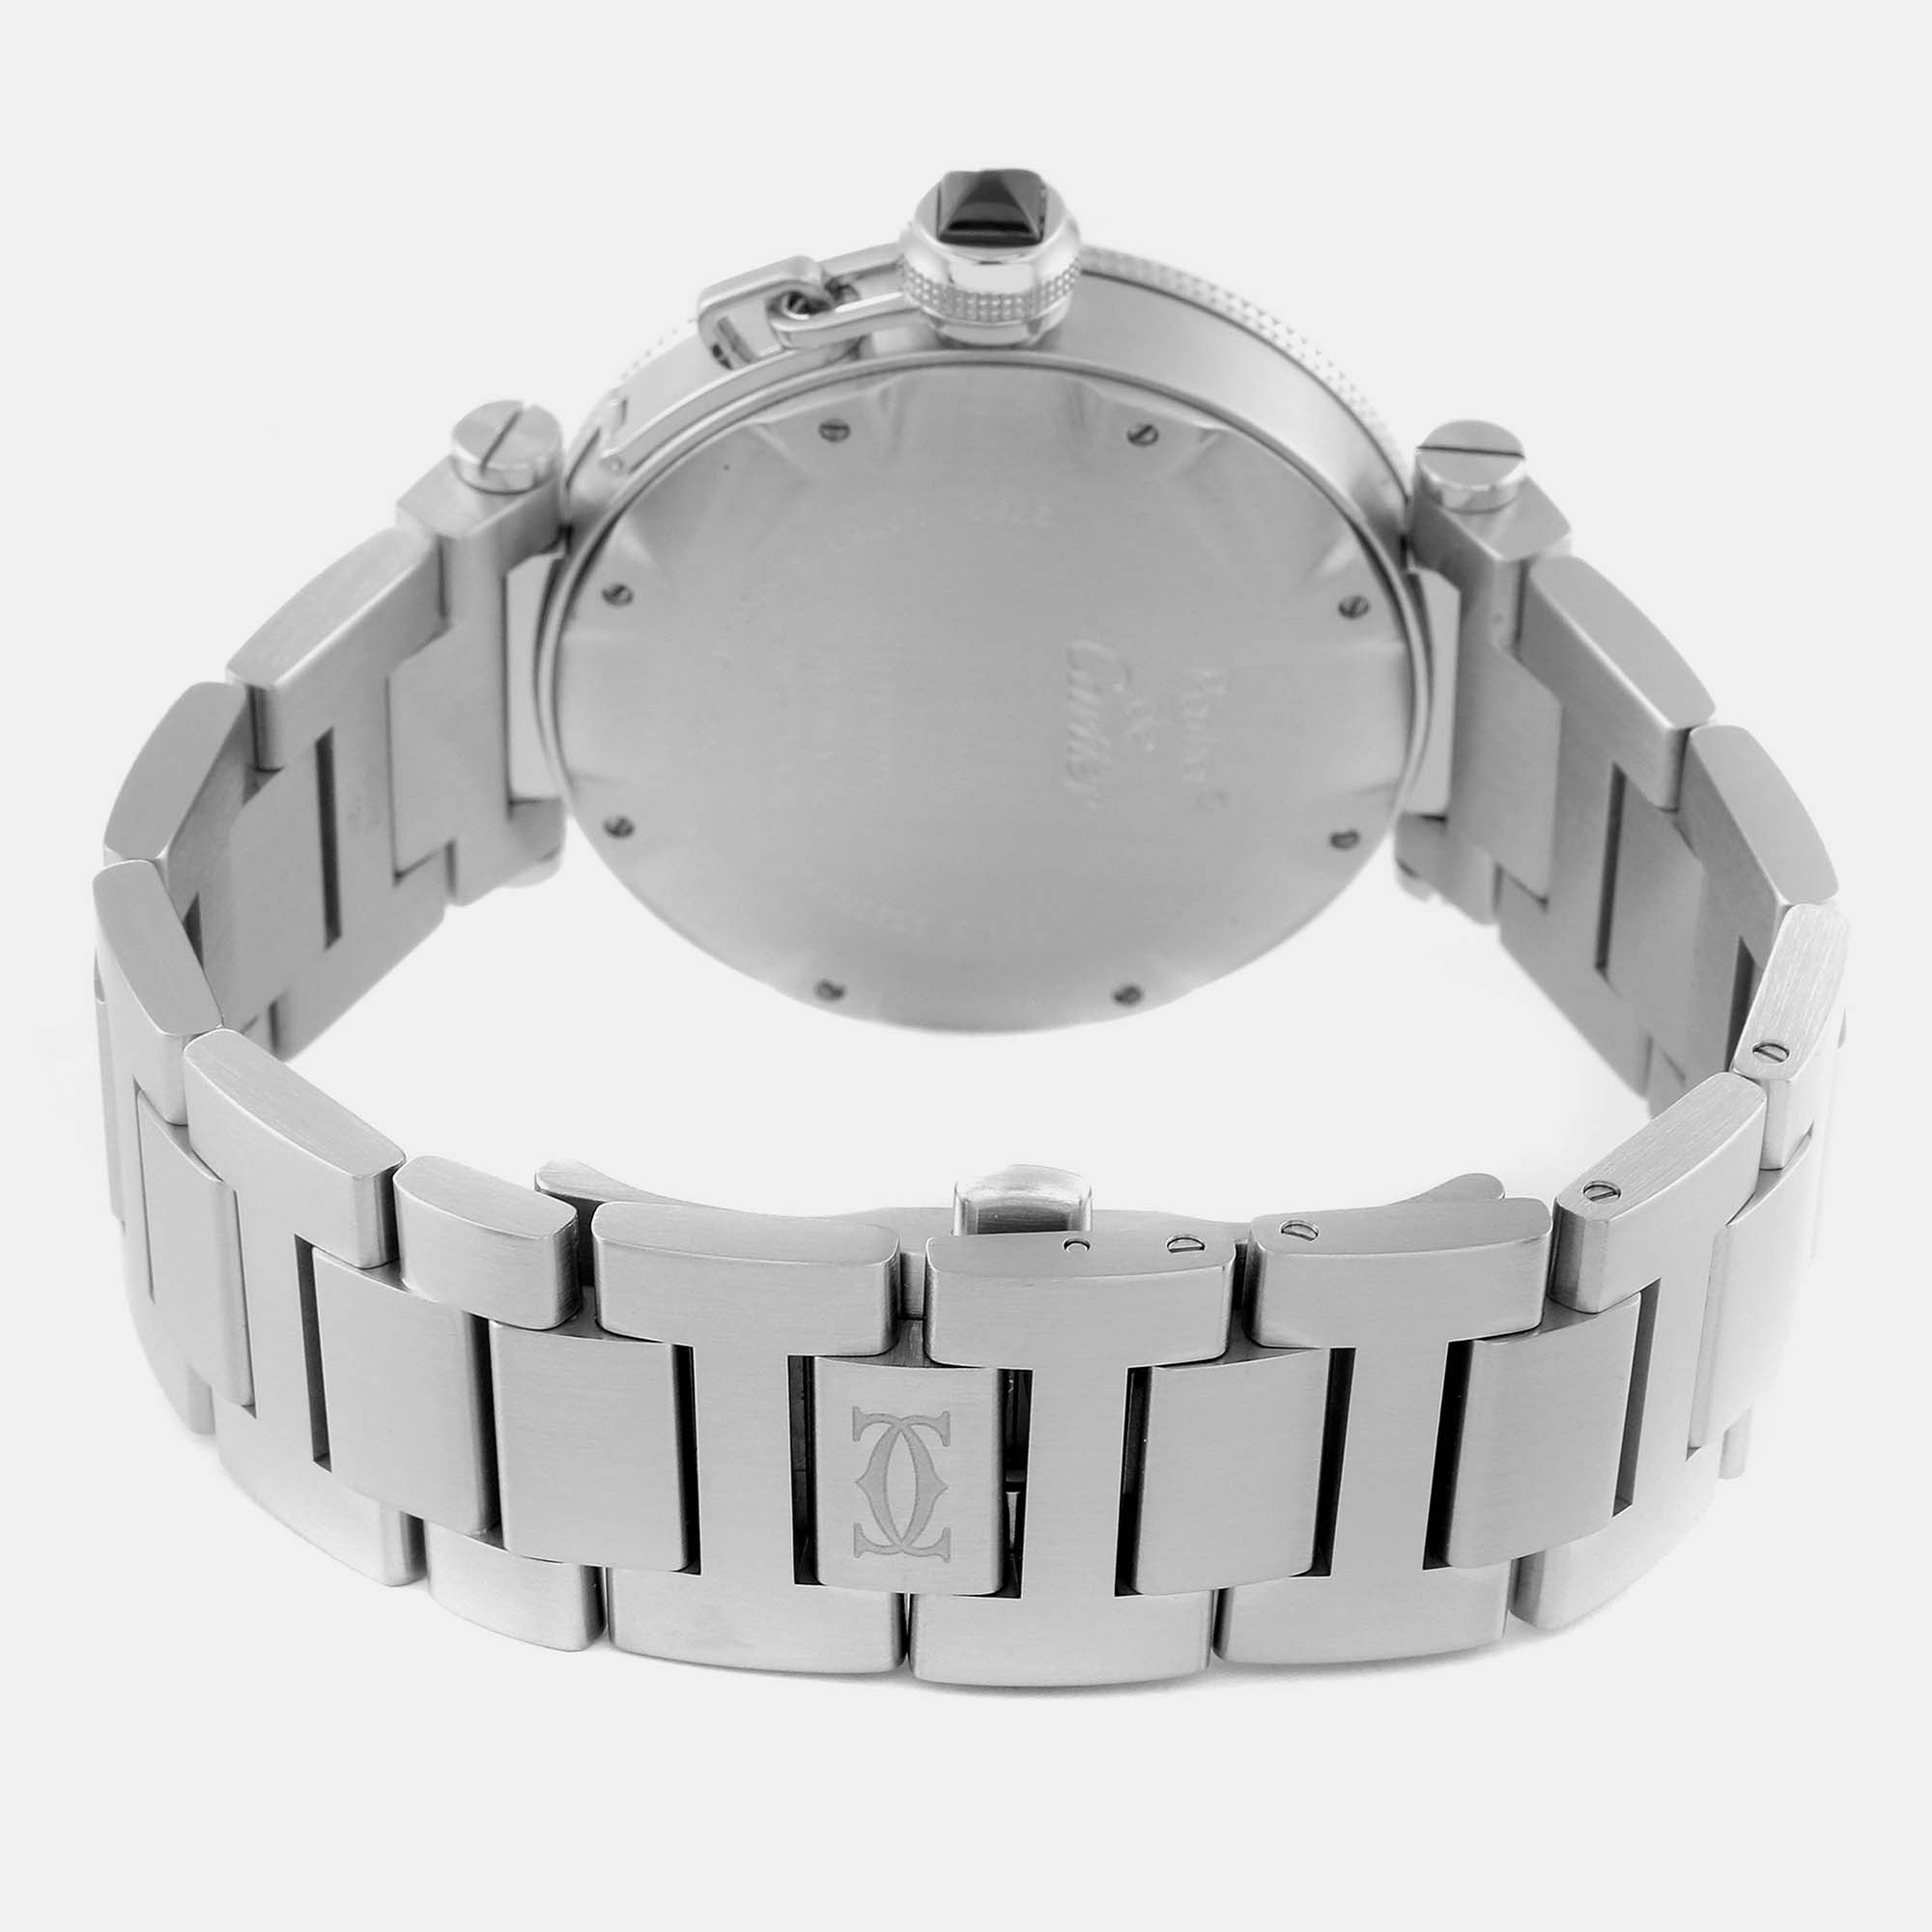 Cartier Pasha Seatimer Black Dial Automatic Steel Men's Watch W31077M7 40.5 Mm